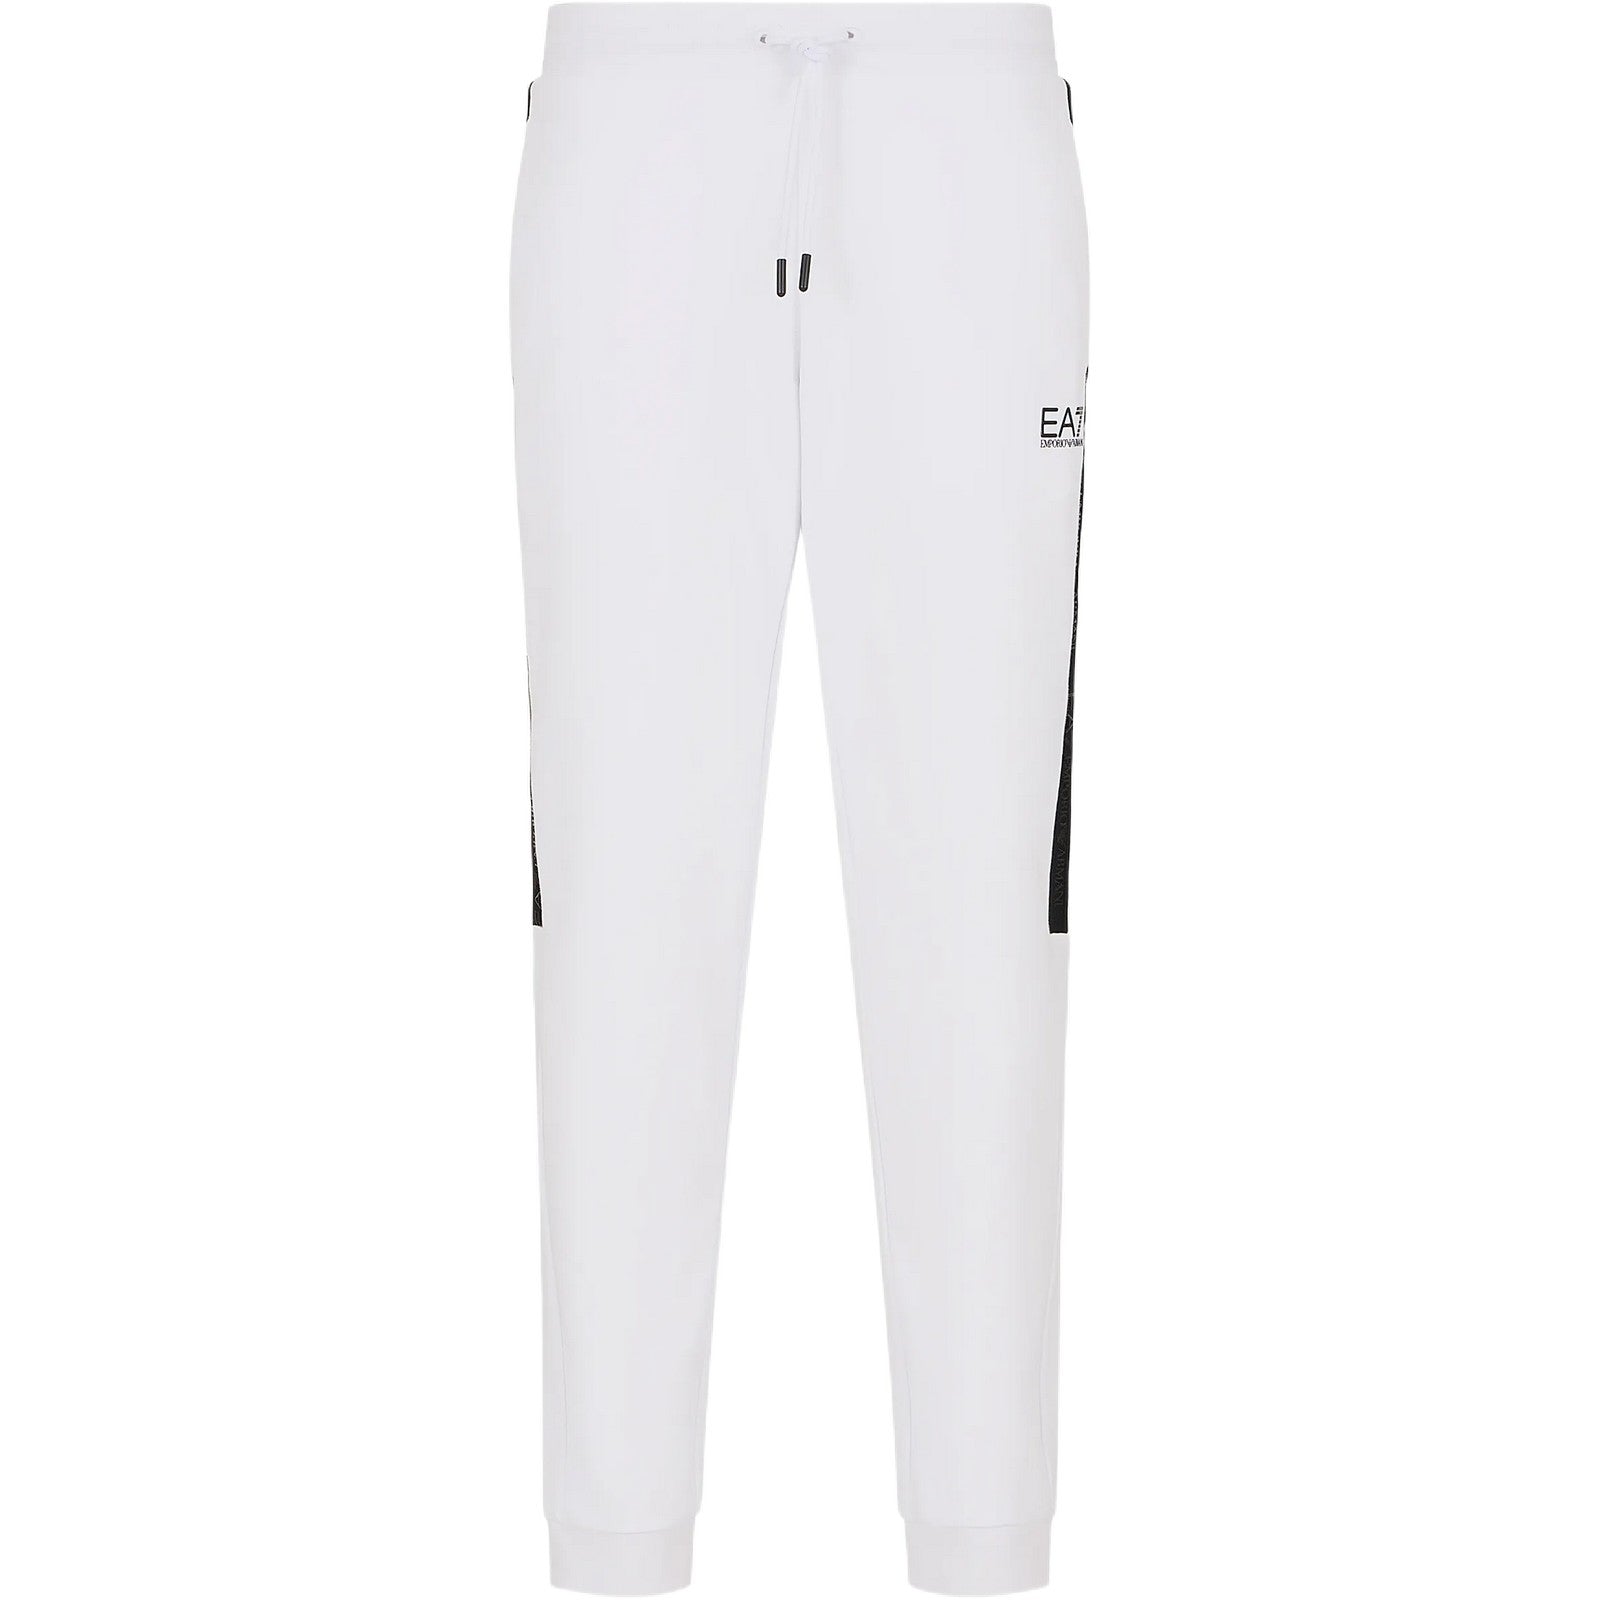 Pantaloni Uomo Emporio Armani - Trouser - Bianco